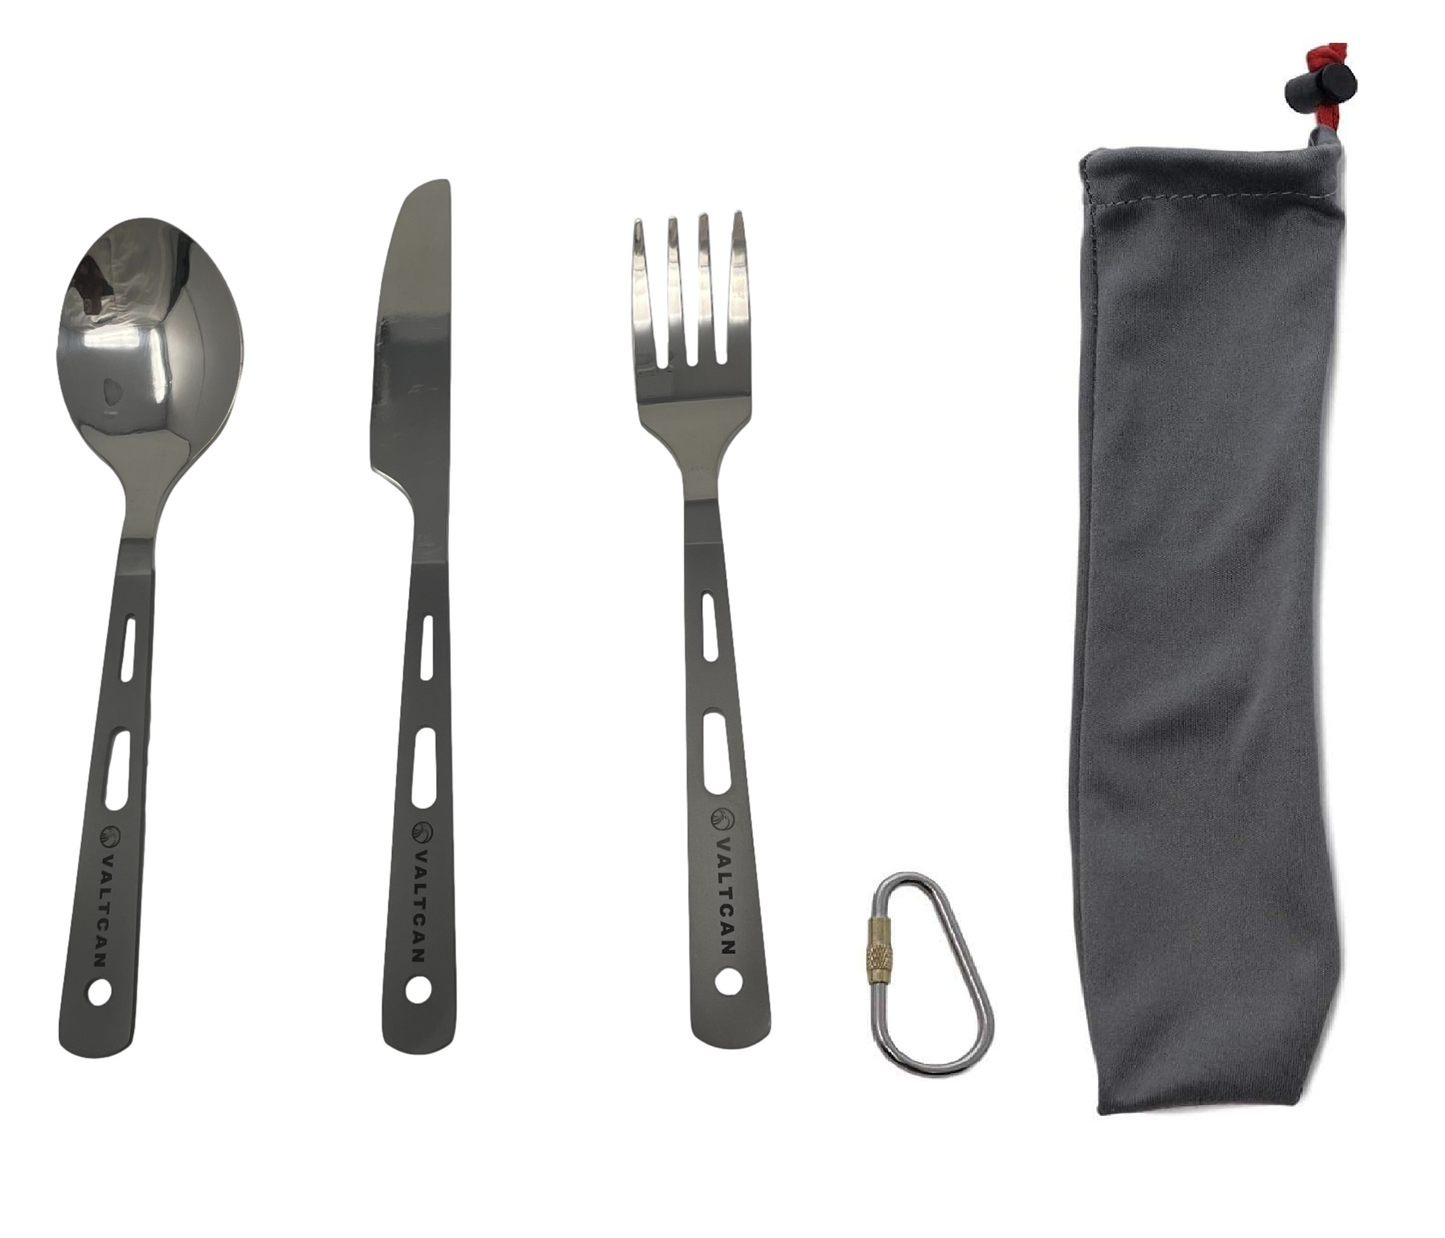 Valtcan Titanium Cutlery Camping Flatware Utensils Set Polished Ends 45.5g